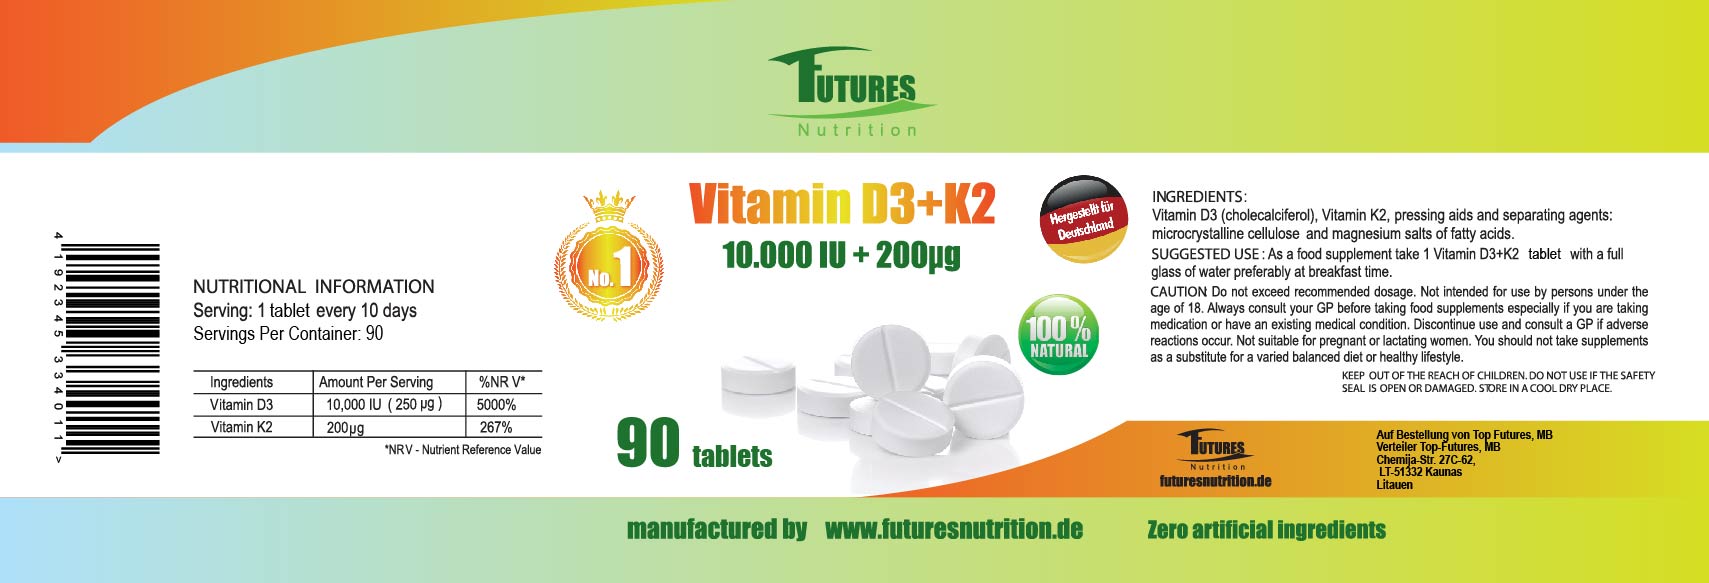 50 x Vitamin D3 K2 10000i.e 4500 tablets